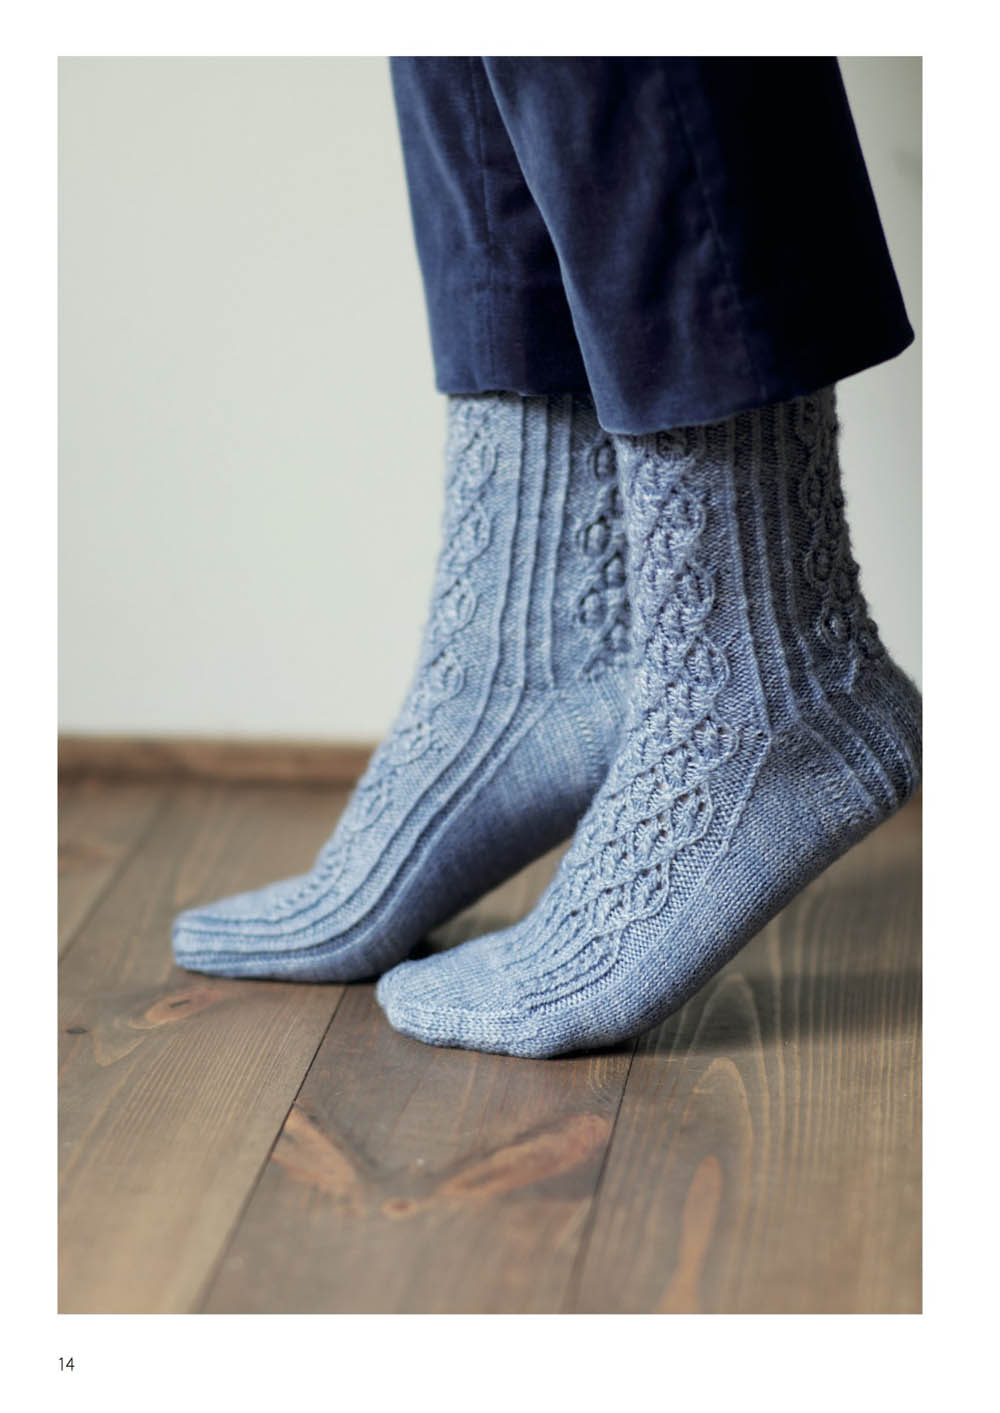 Socks book of knitting in popular pattern